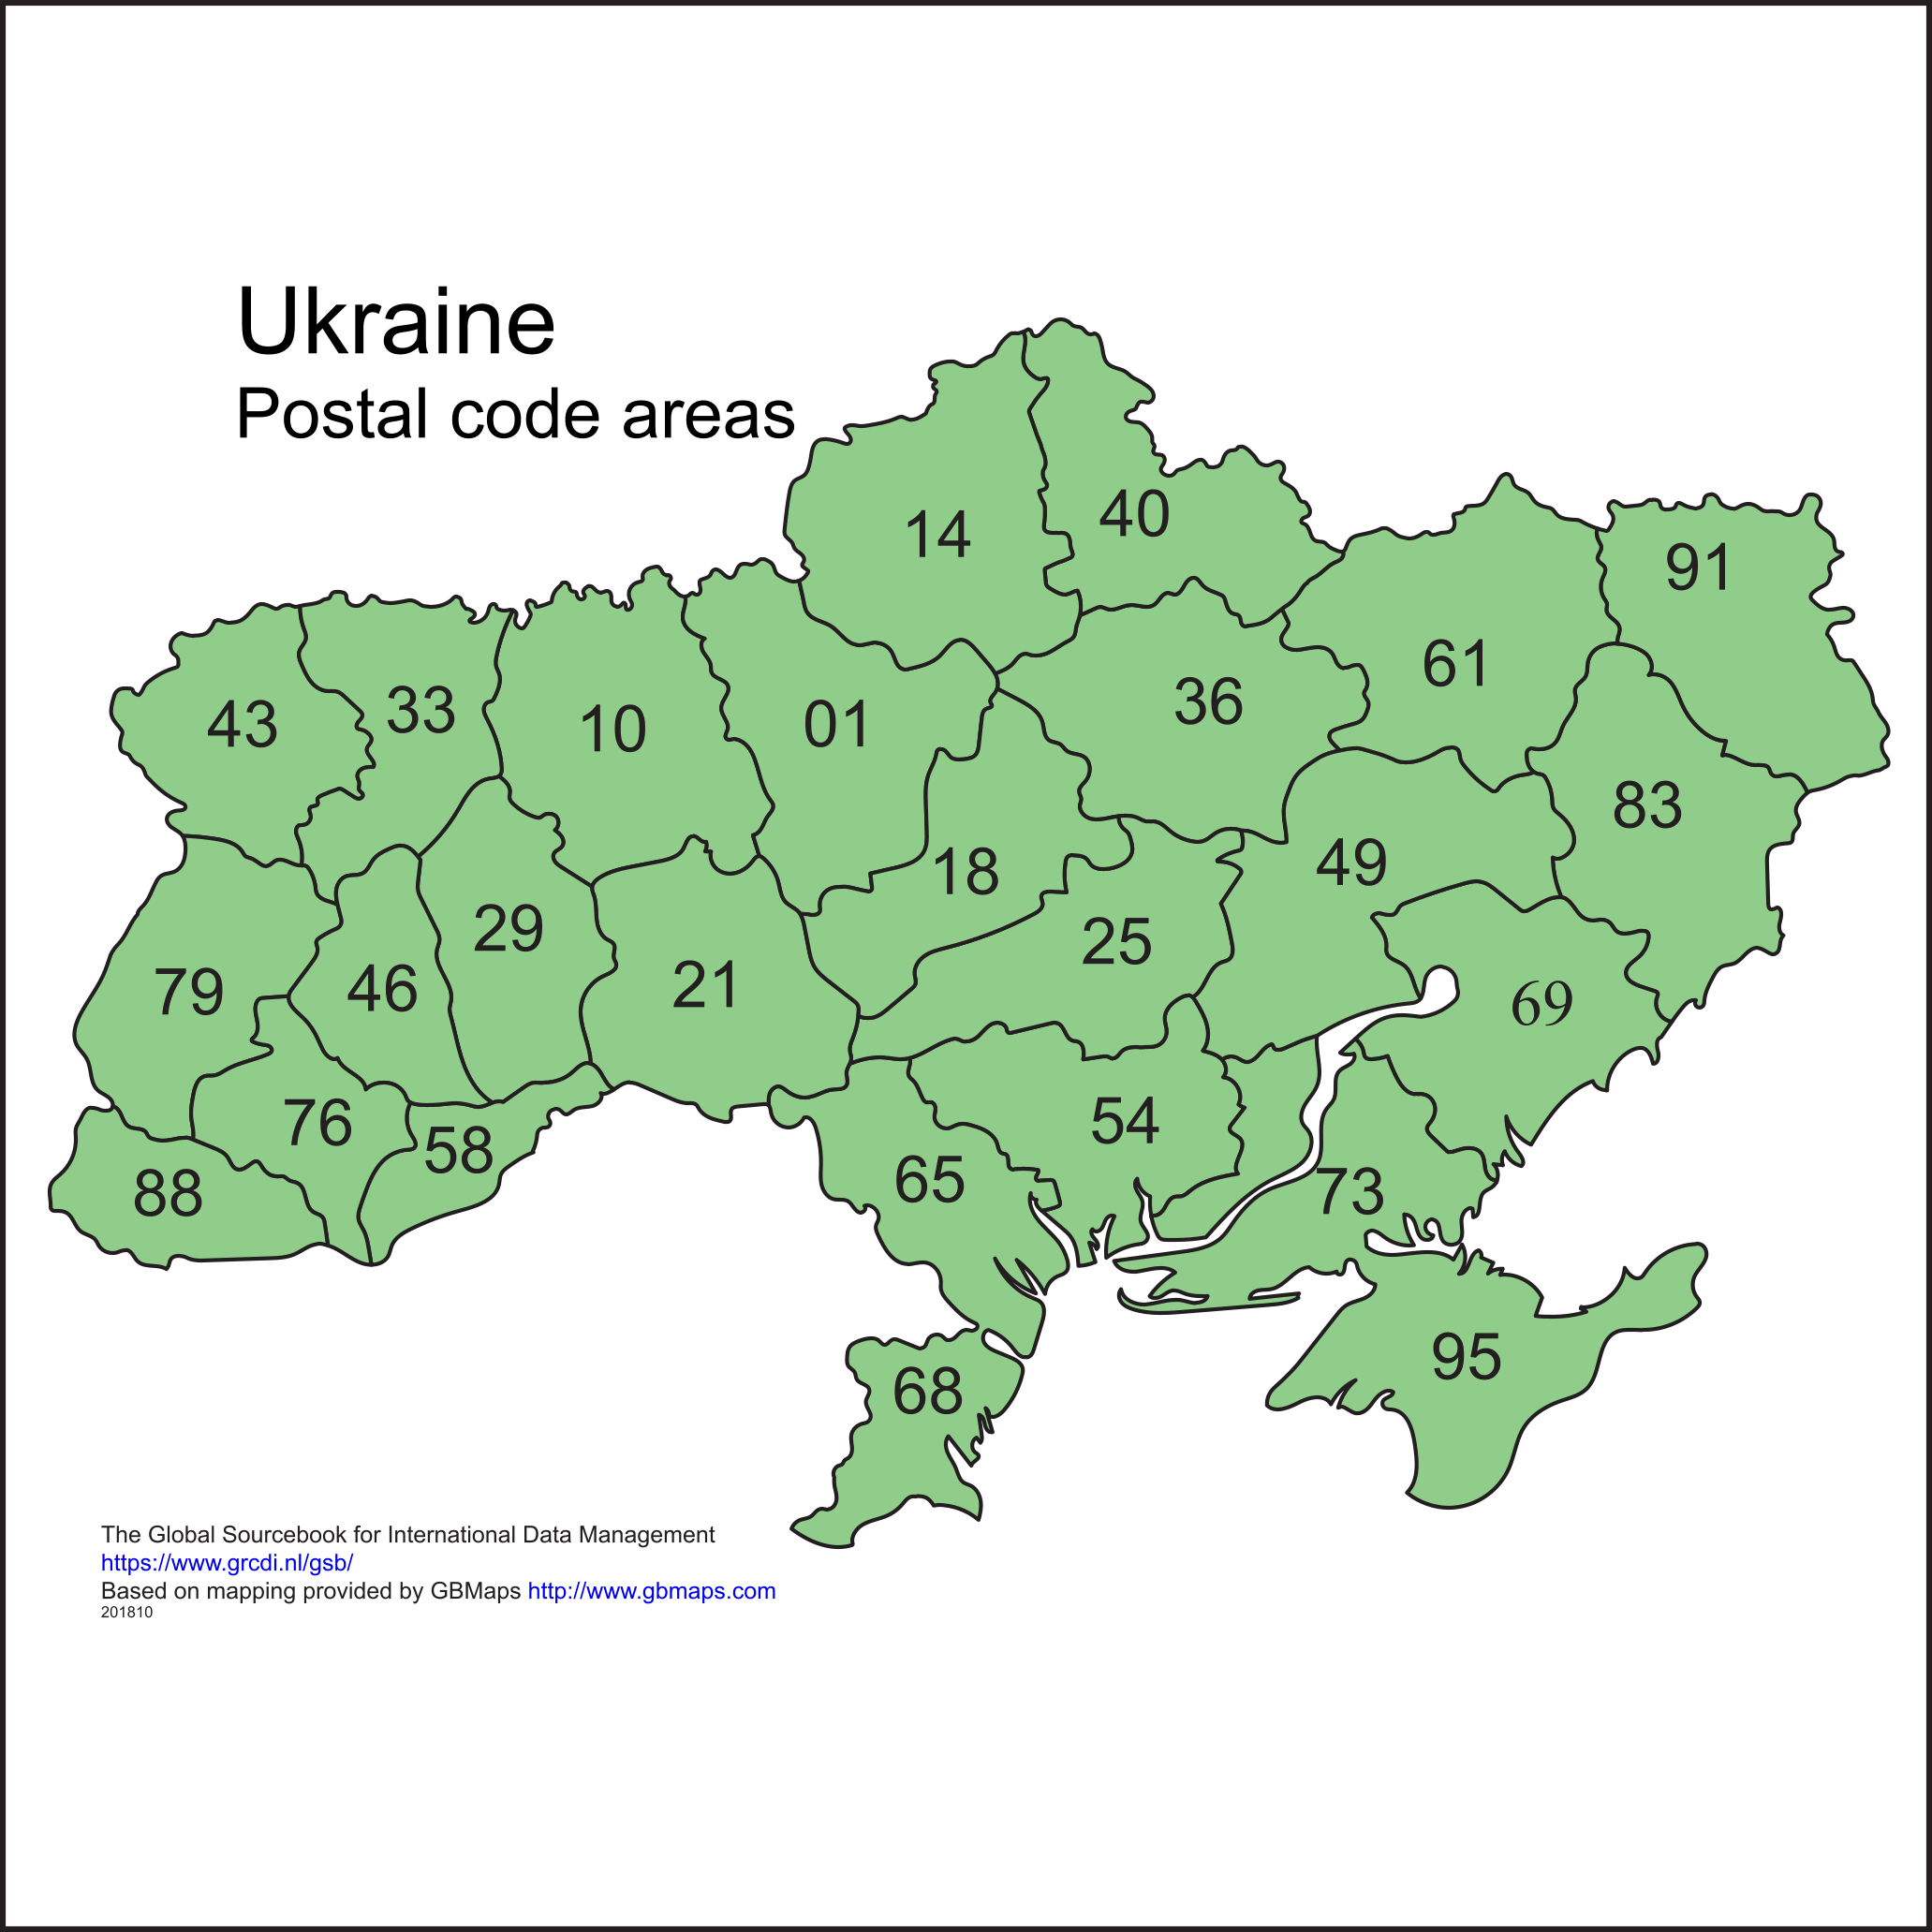 Ukraine postal code areas